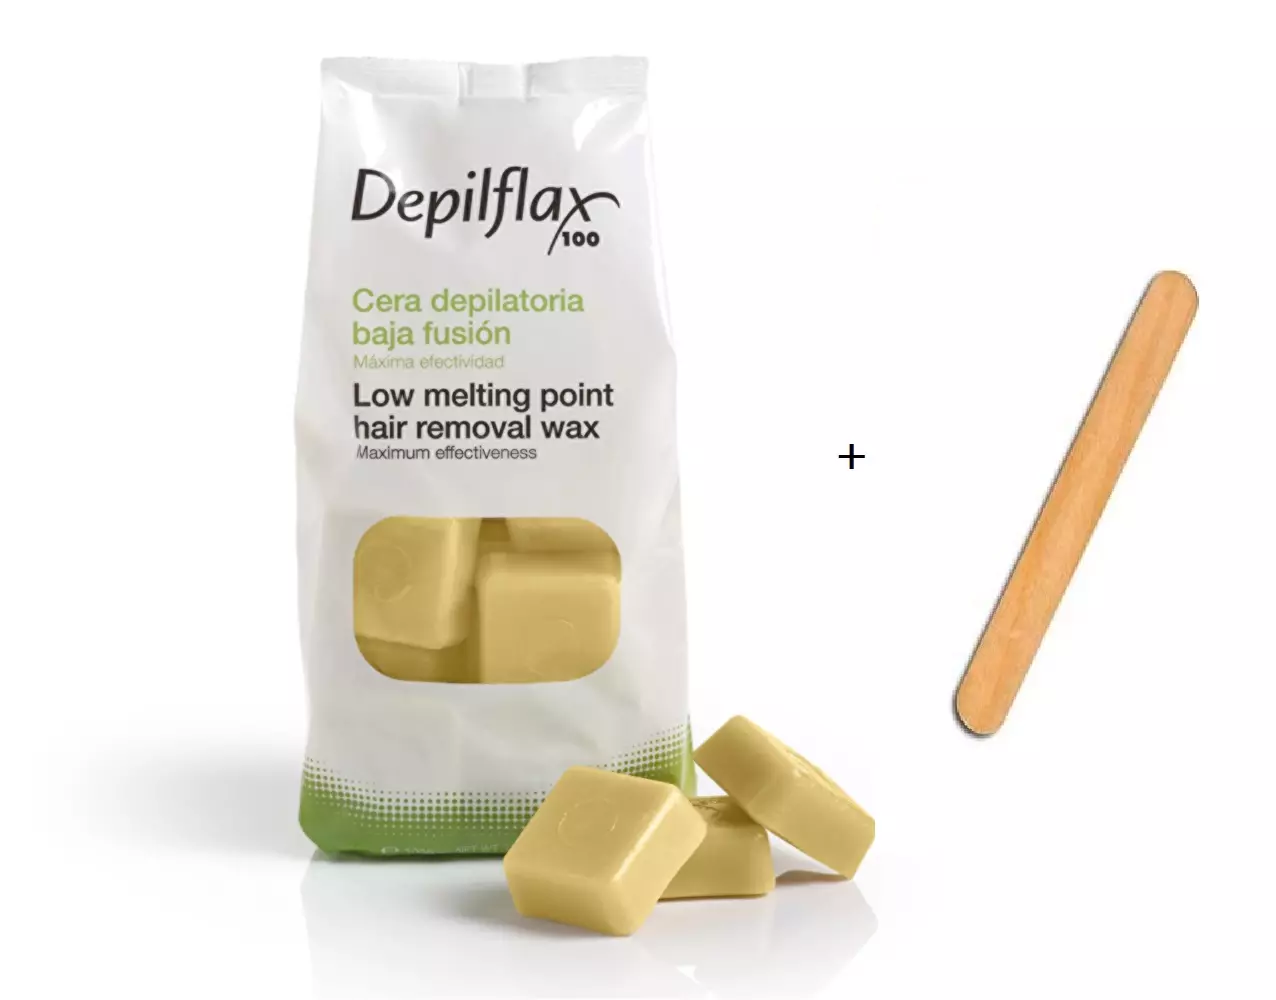 Depilflax voska: Vosak za depilaciju u kertridža i brikete, film vosak, 